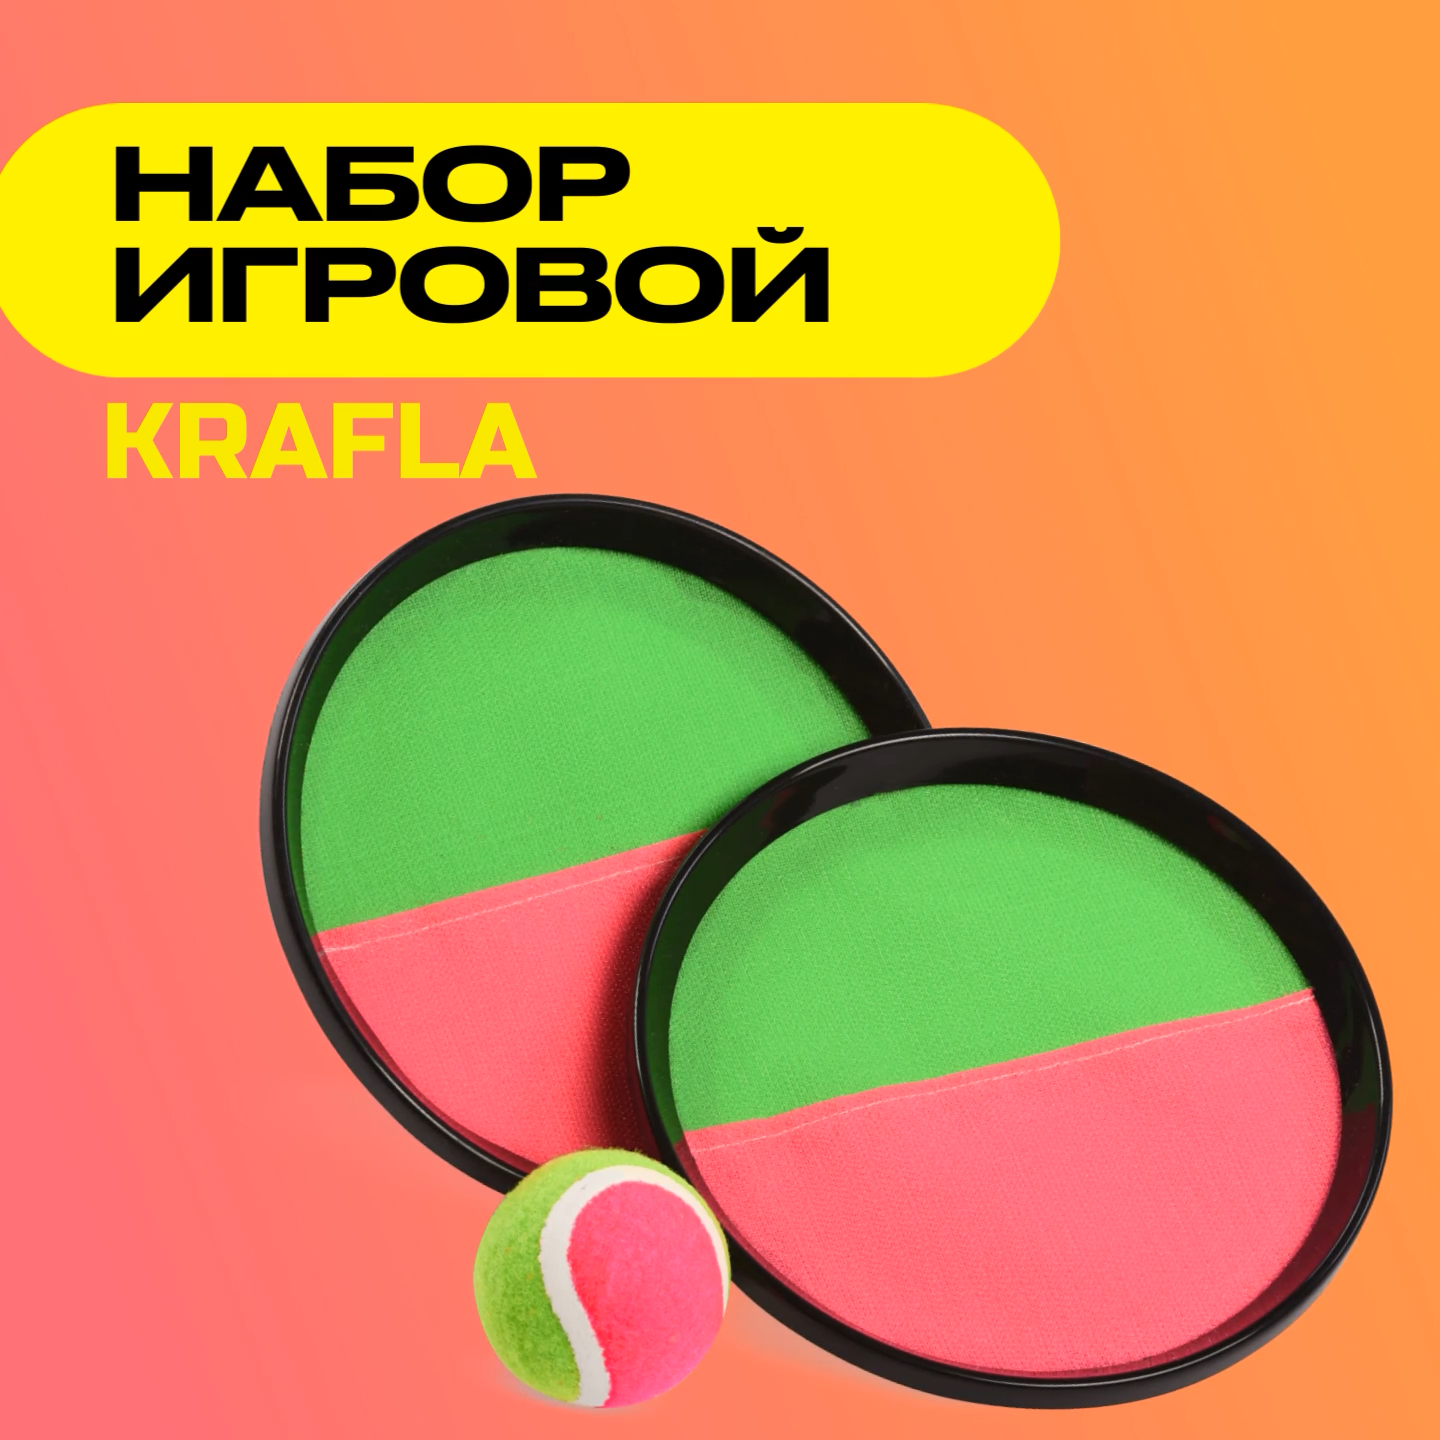 KRAFLA S-PL200 Набор игровой (тарелки-ловушки 2 шт. и мяч)